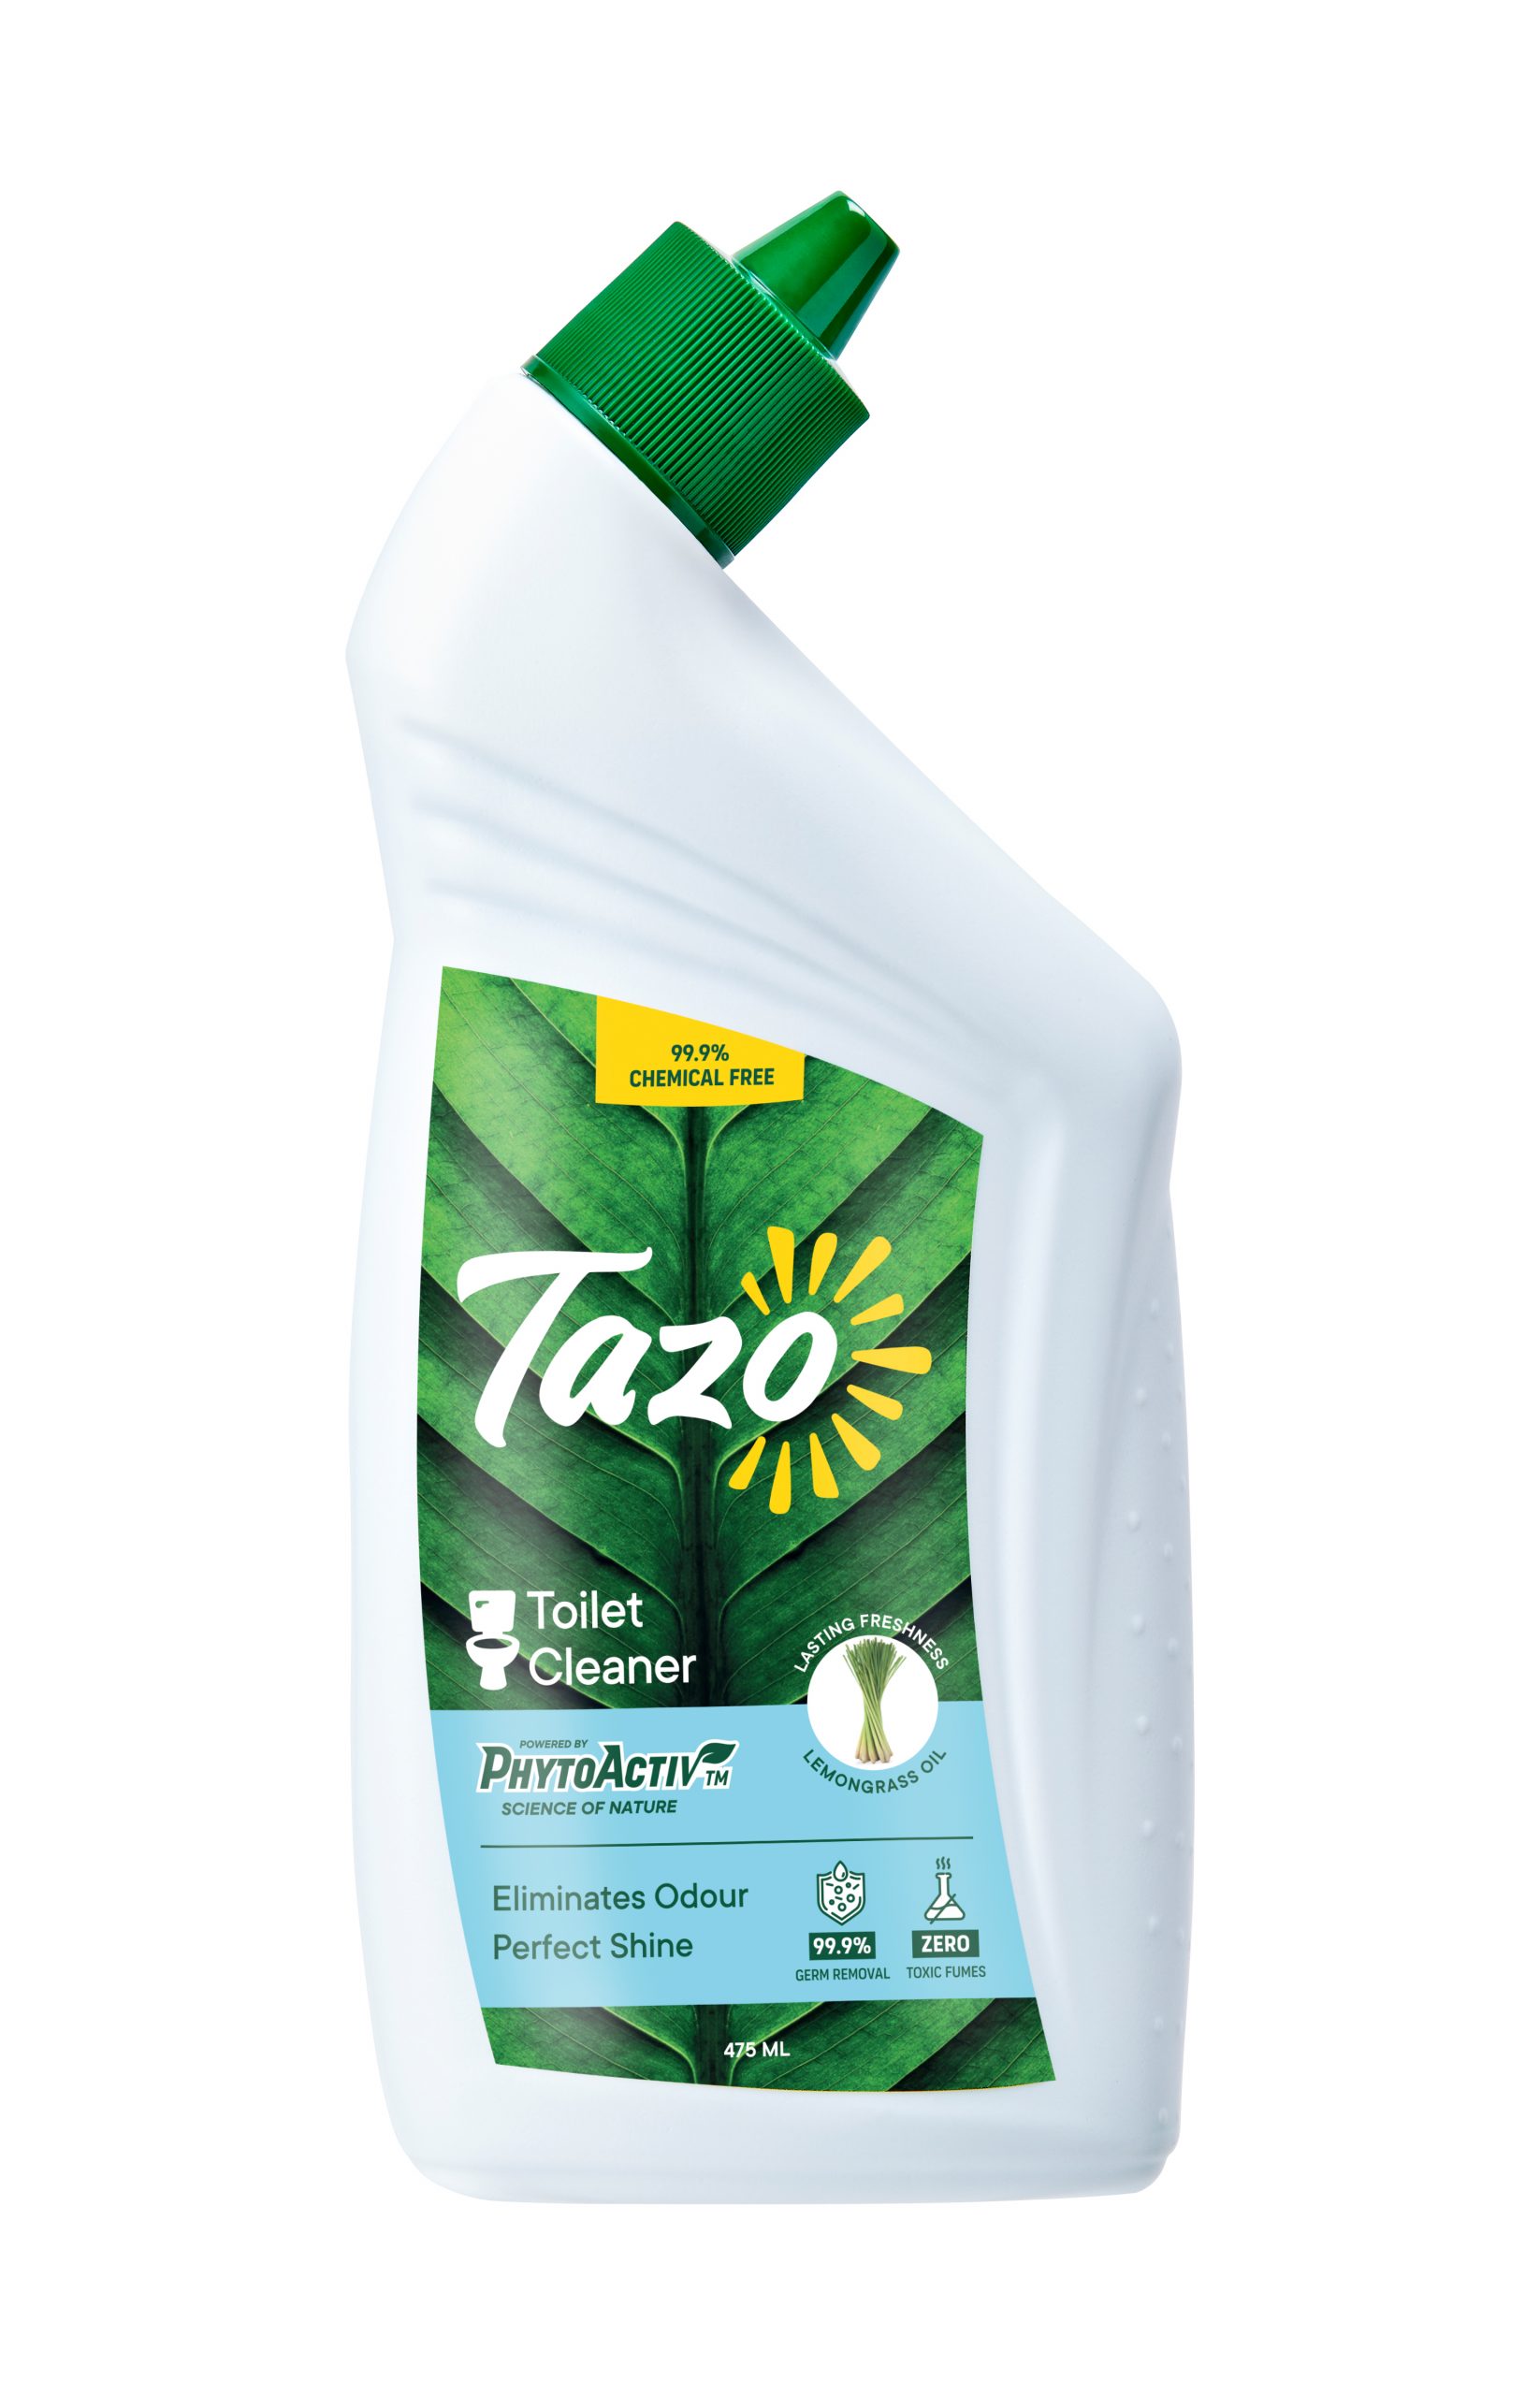 Tazo Toilet Cleaner